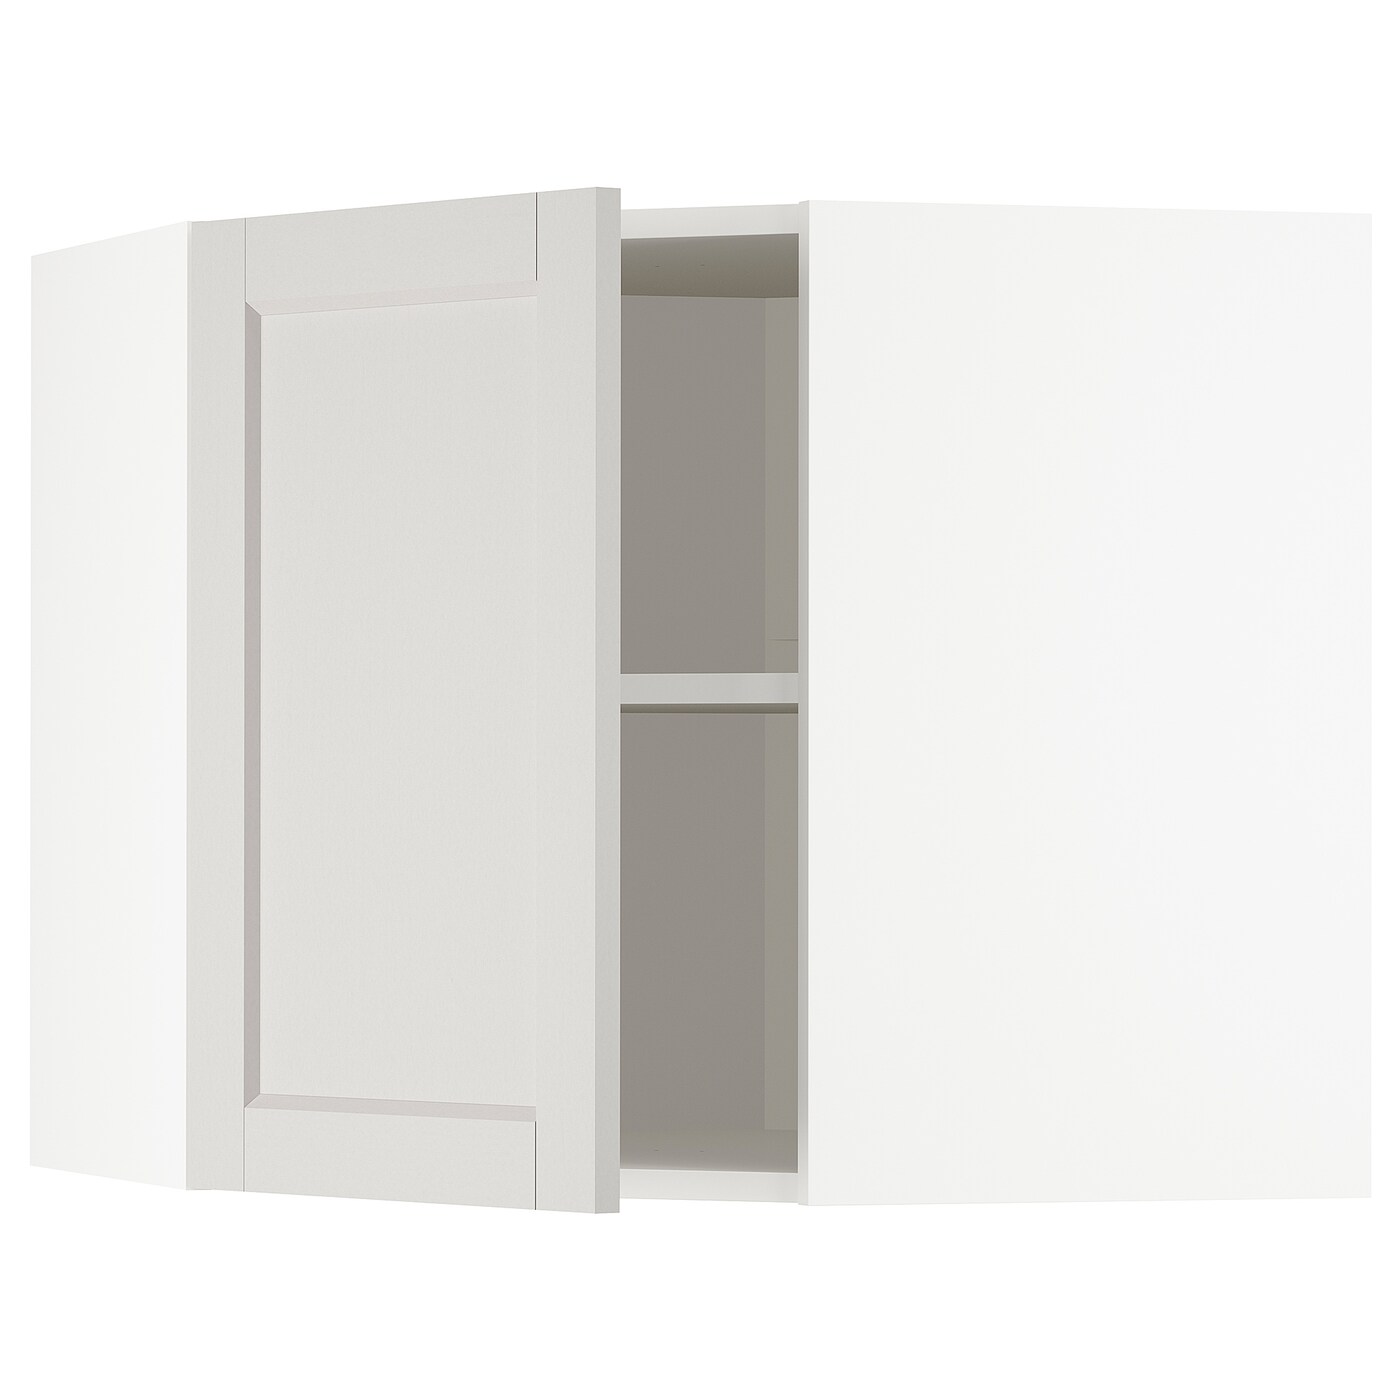 METOD Навесной шкаф - METOD IKEA/ МЕТОД ИКЕА, 60х68 см, белый/светло-серый